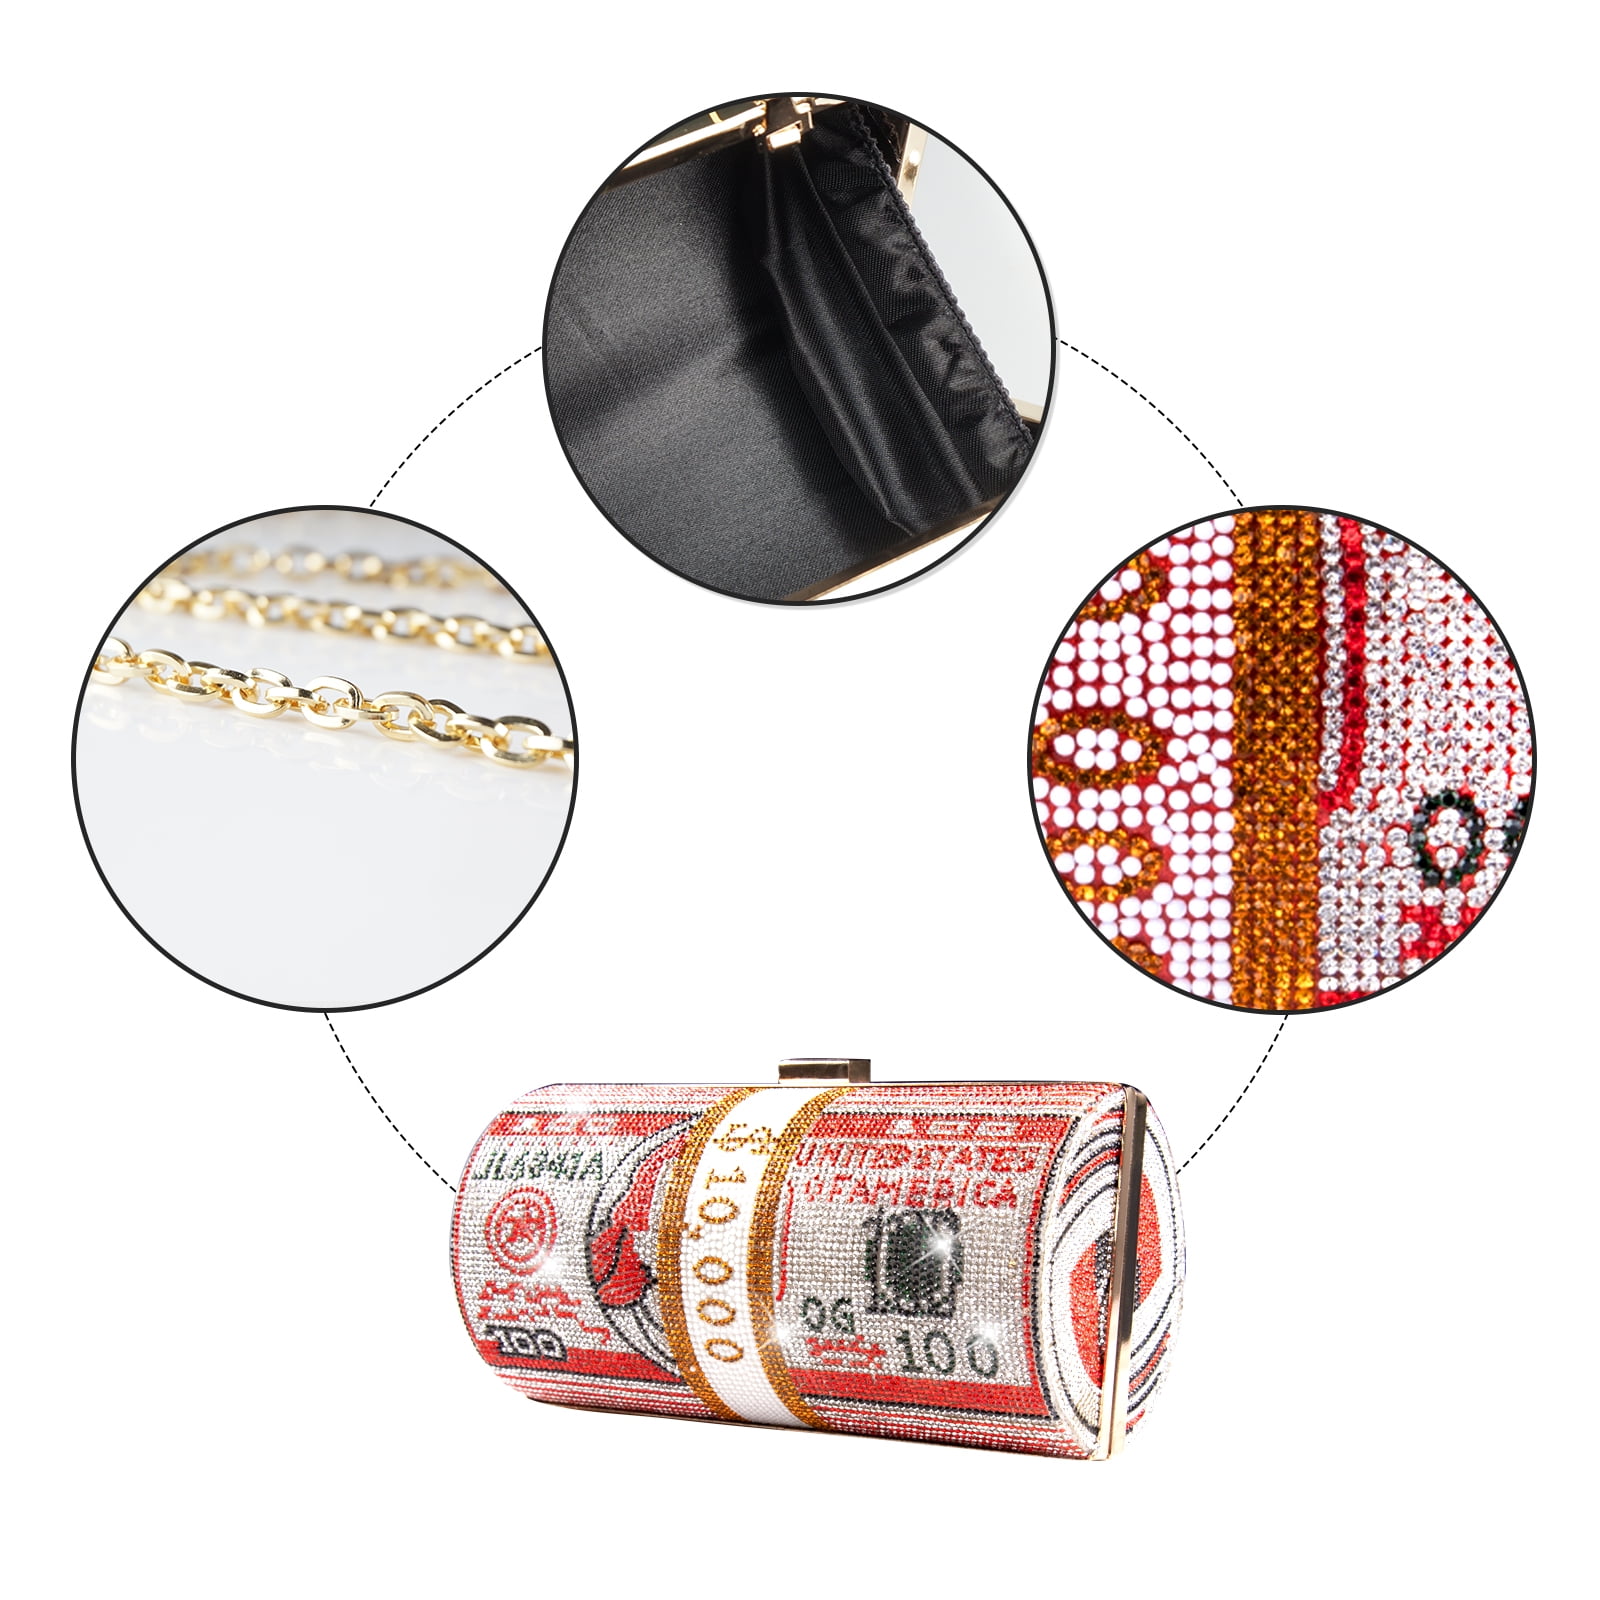 Pen + Gear Money Pouch Security Deposit Utility Zipper Bags, Black  Leatherette PU Material - Walmart.com